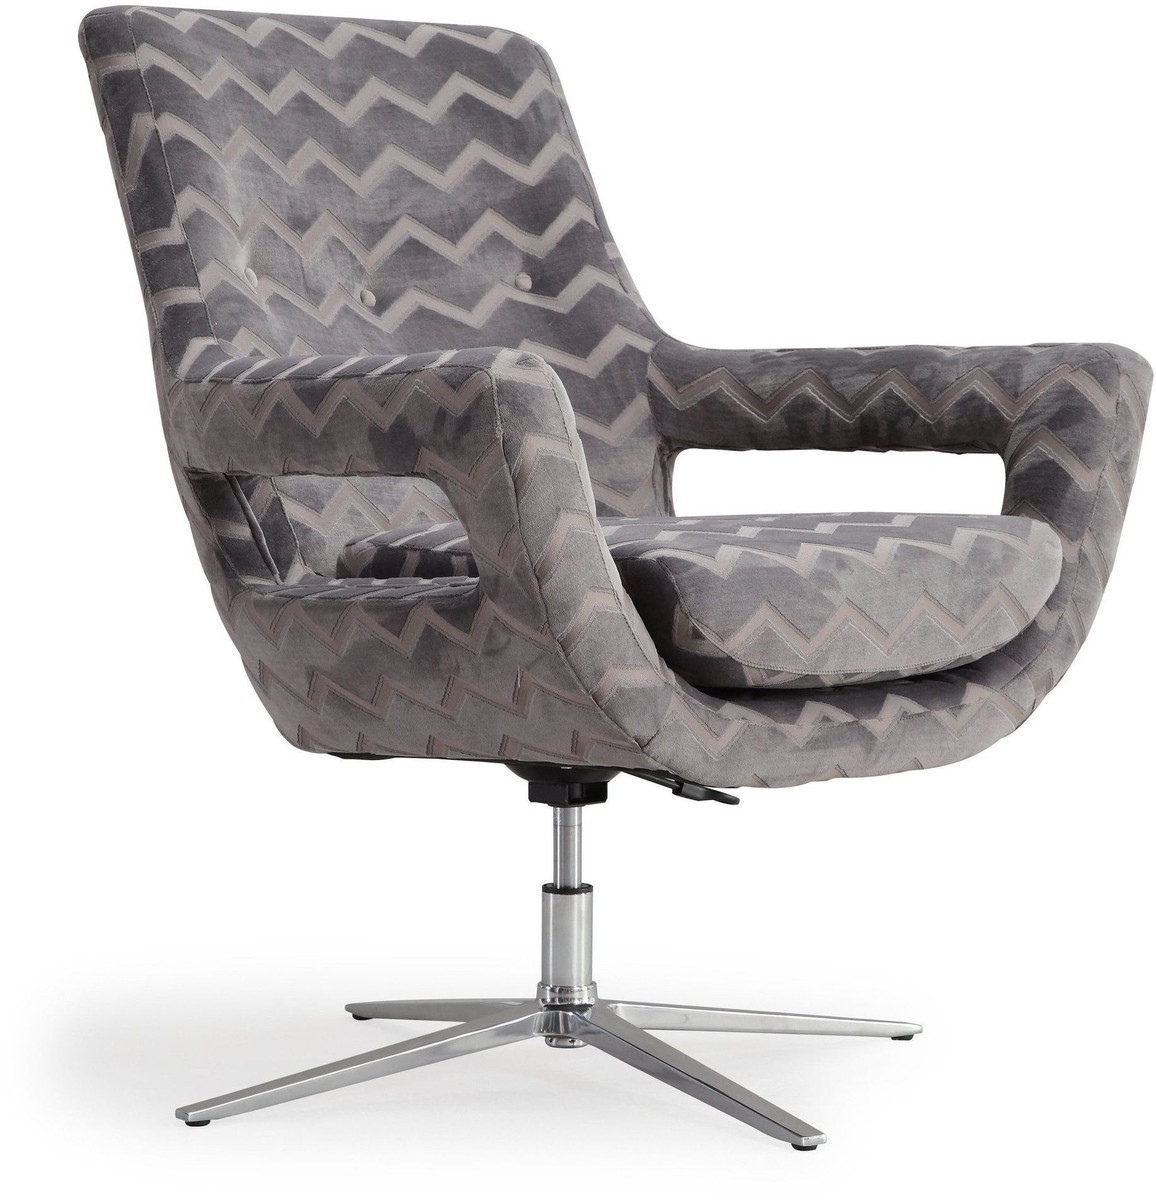 Fiona Morgan Striped Swivel Chair - Image 1